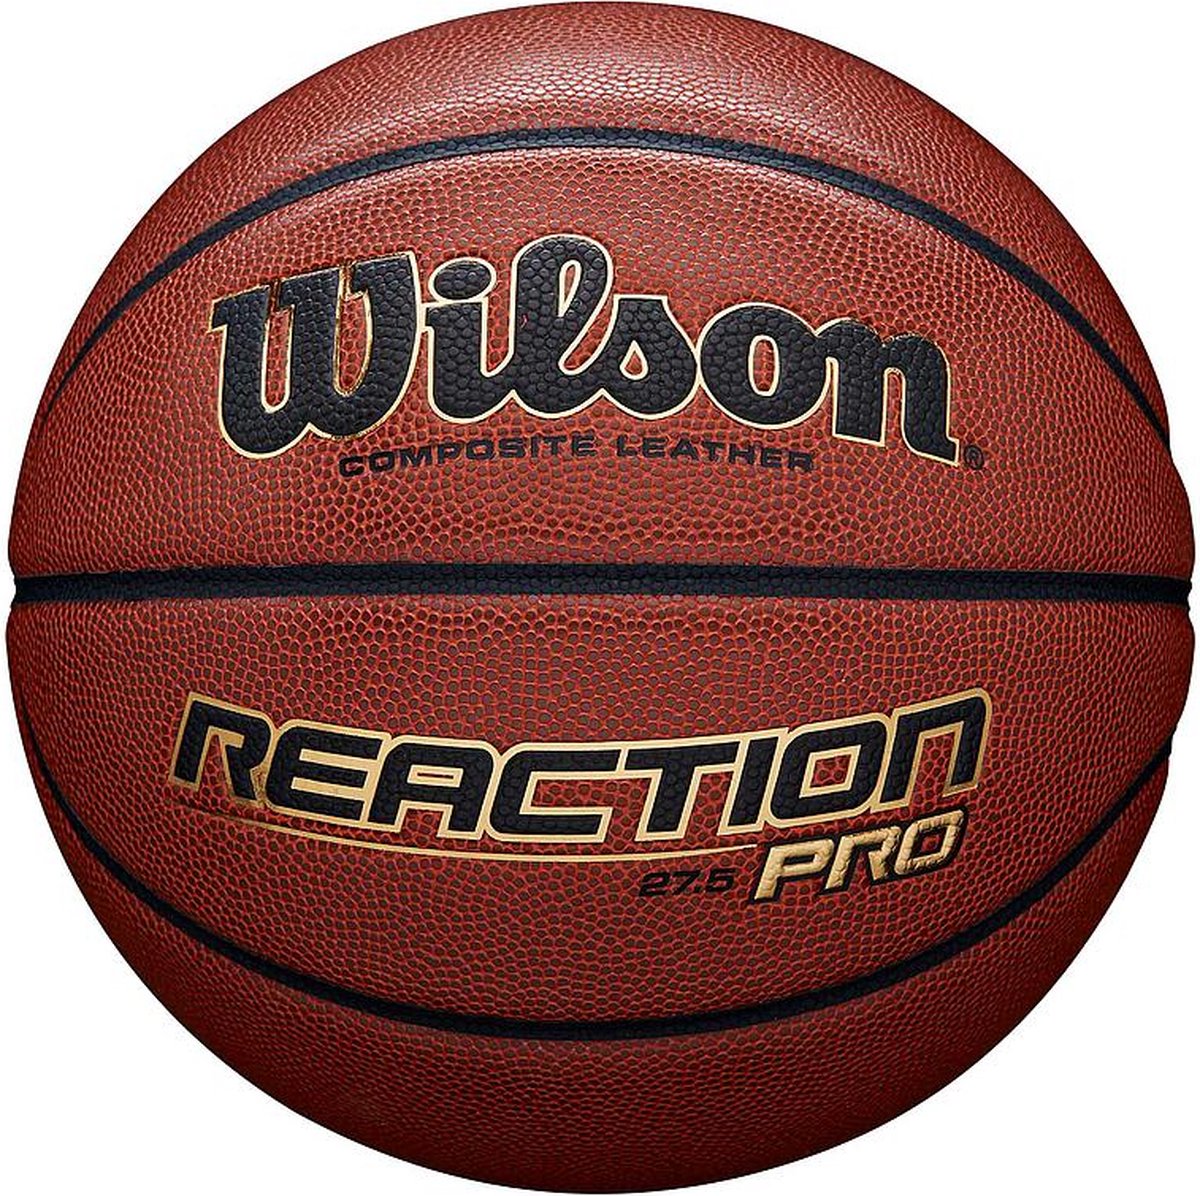 Basketball – Reaction Pro 295 – Offizielle Größe